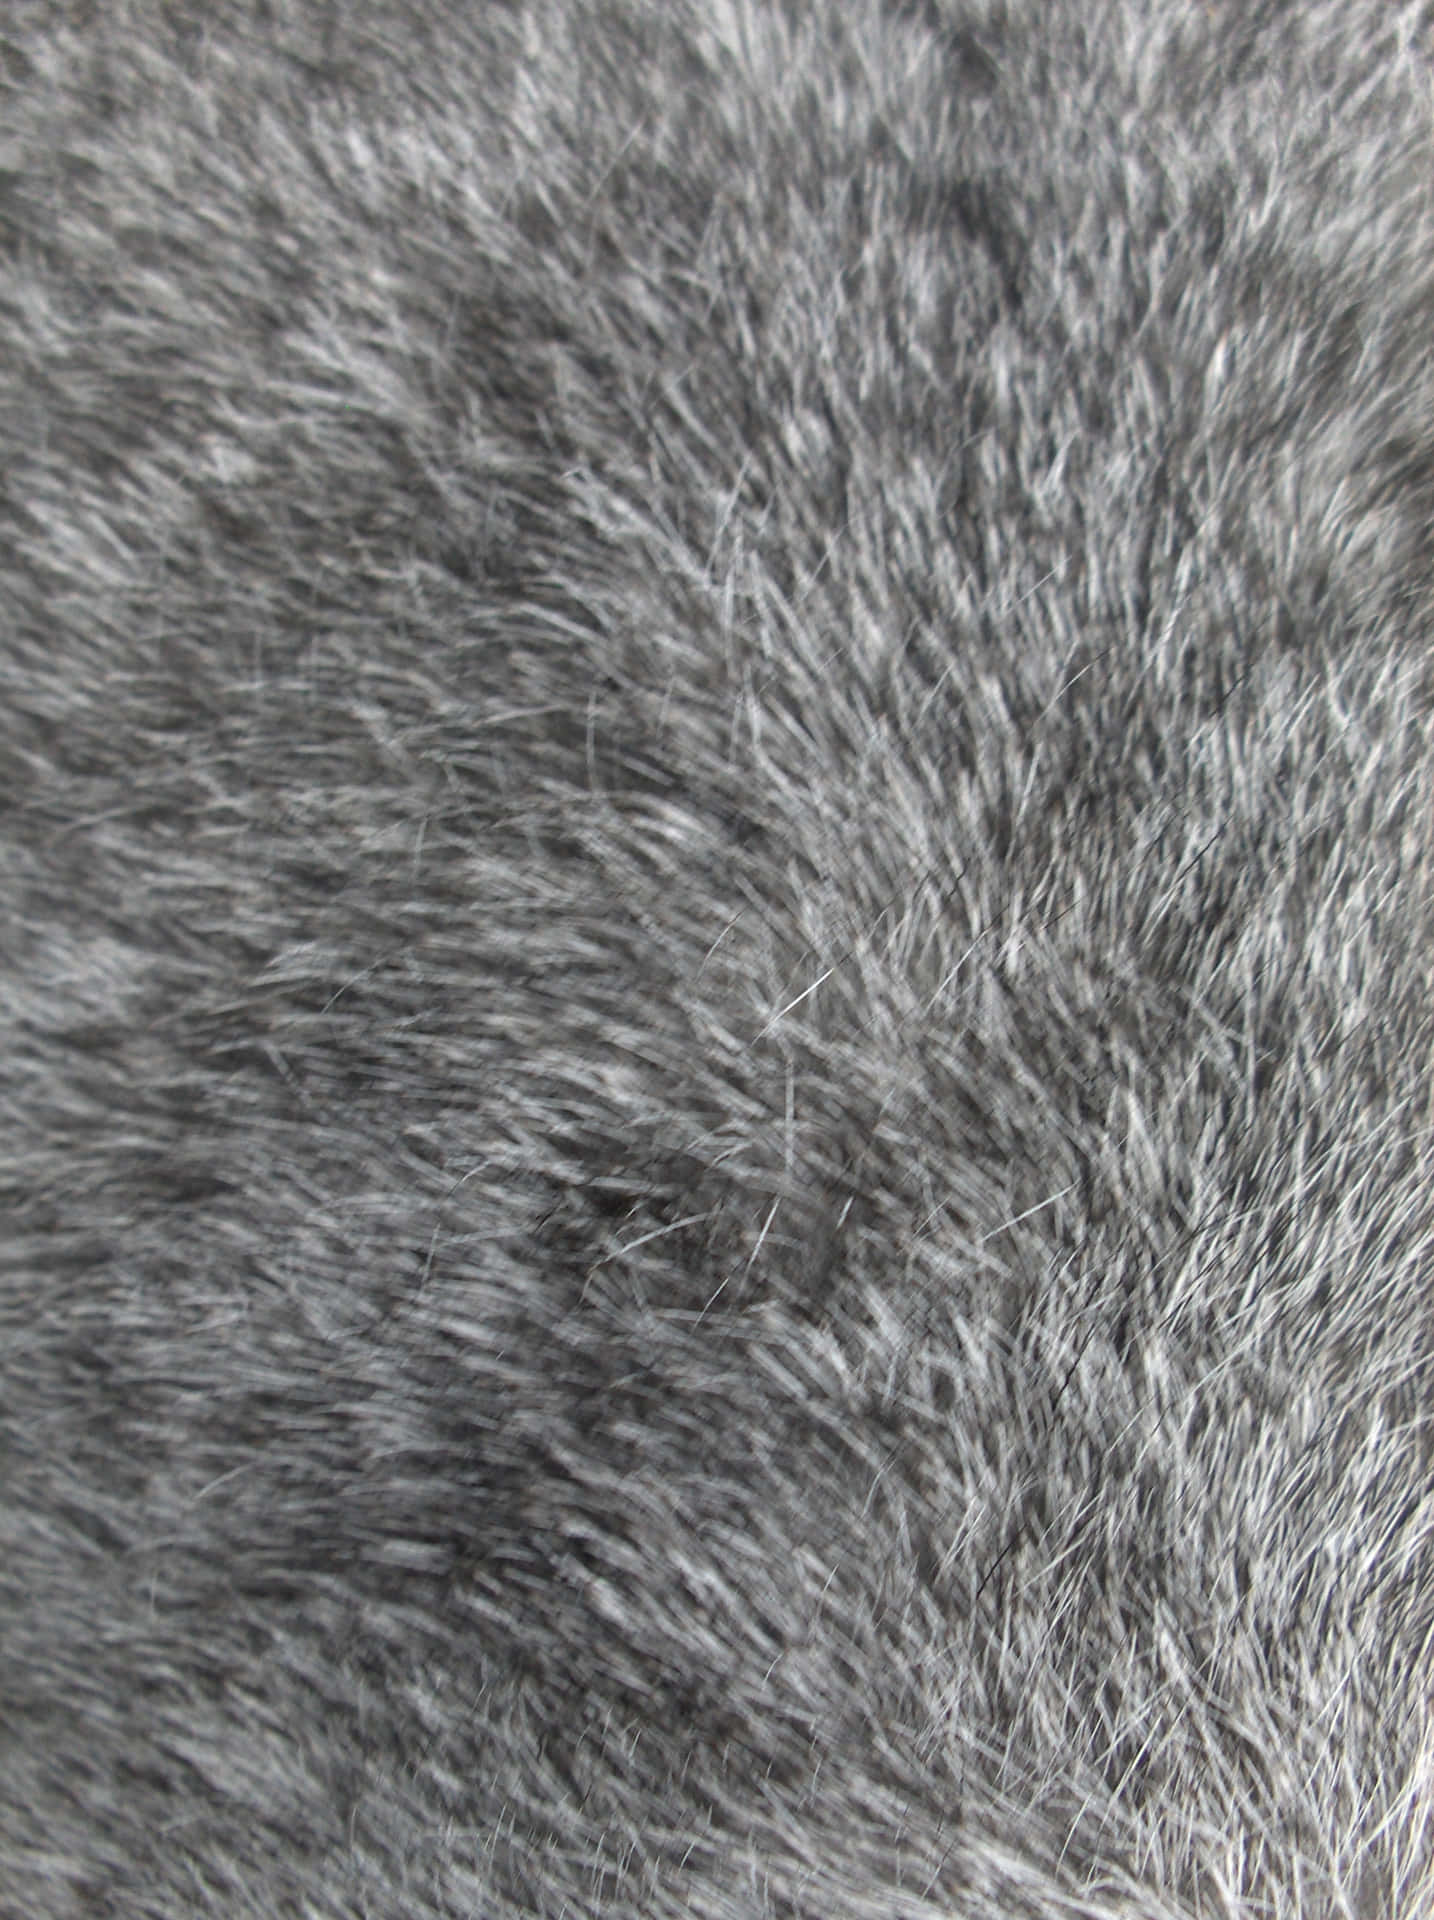 A Close Up Of A Gray Furry Animal